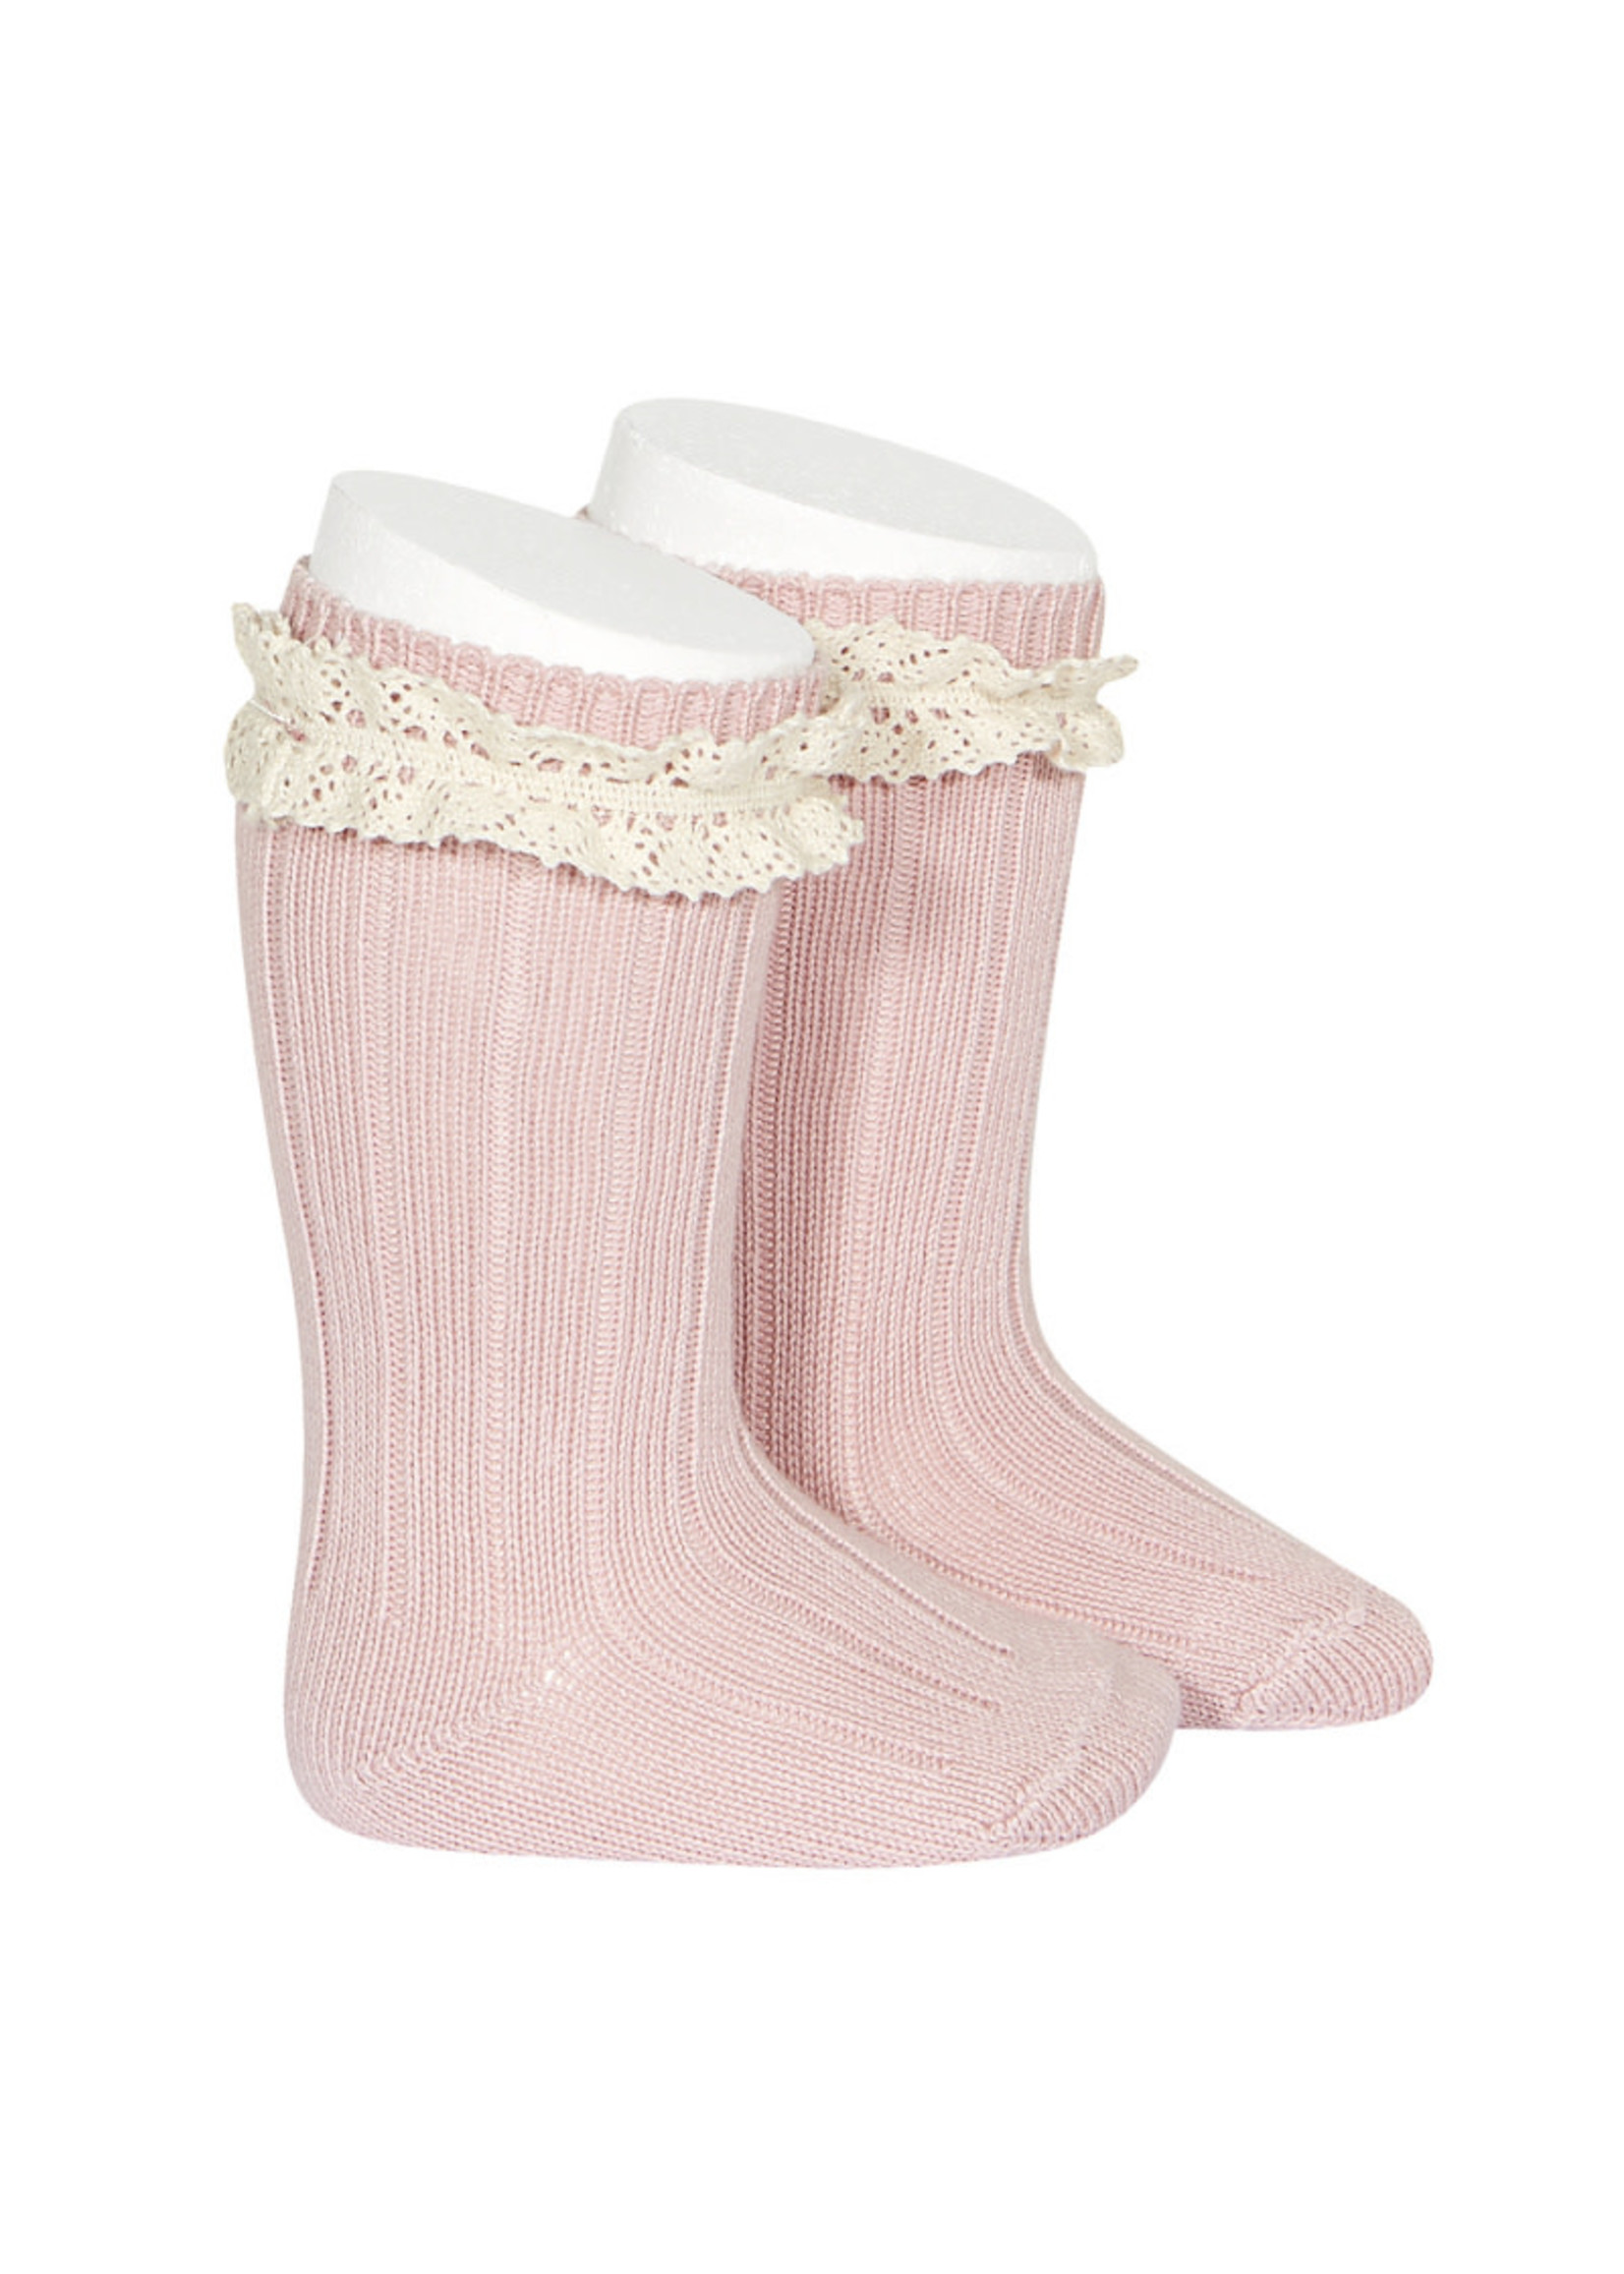 Condor Rib Knee High Socks Vintage - Pale Pink